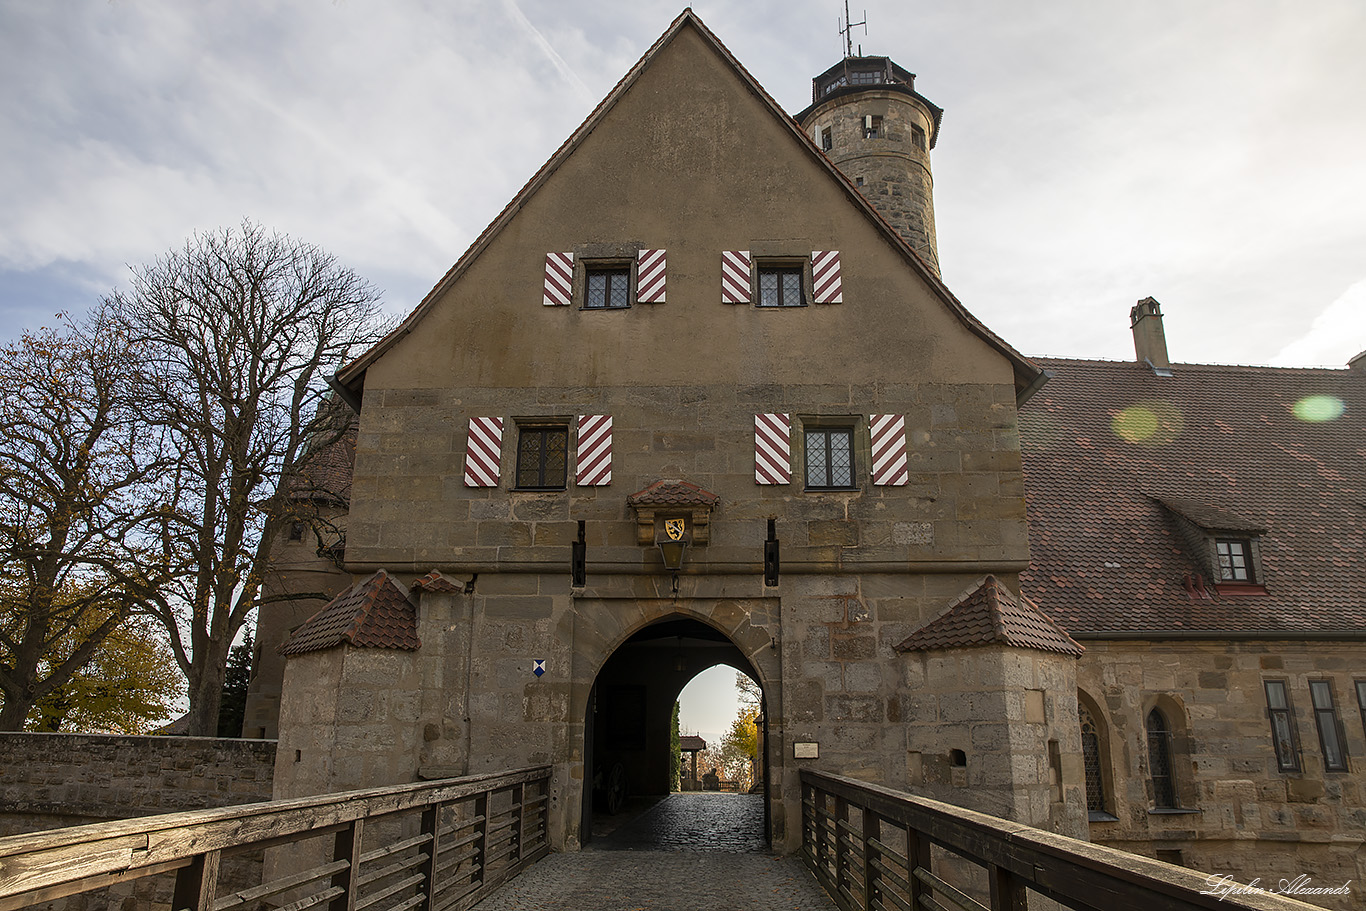 Замок Альтенбур (Burg Altenburg) - Бамберг (Bamberg) - Германия (Deutschland)